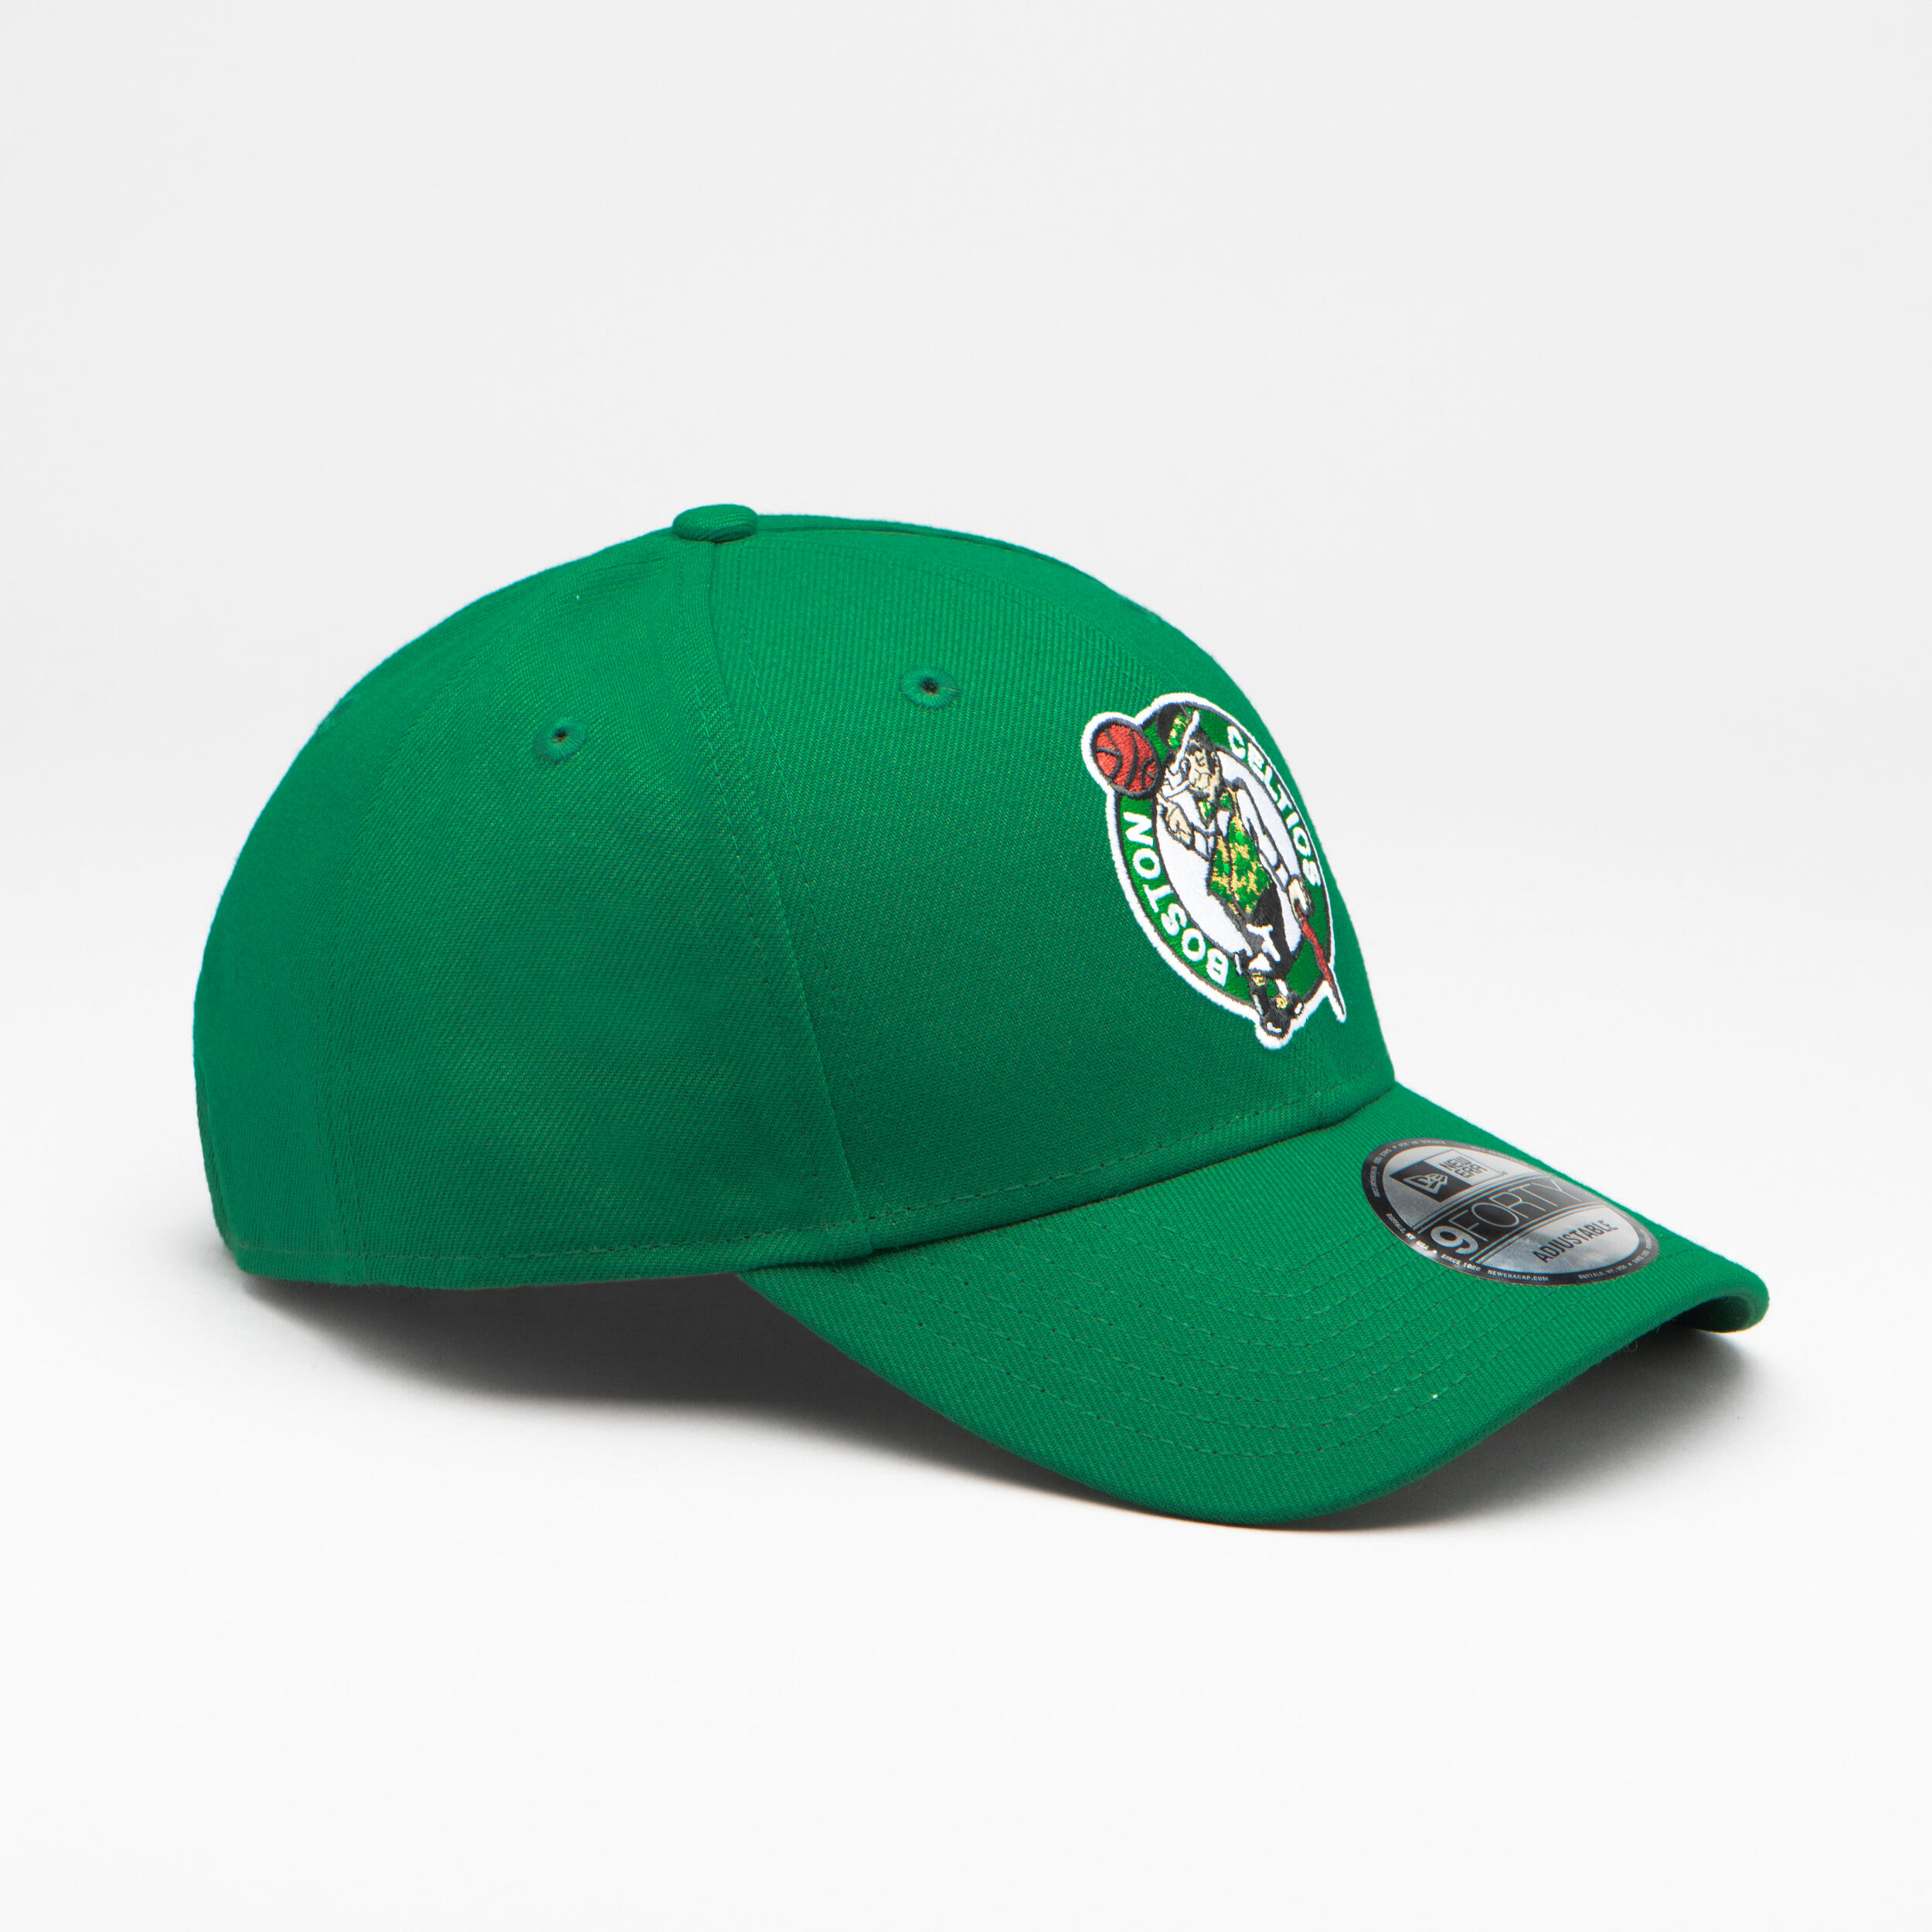 Men's/Women's Basketball Cap NBA - Boston Celtics/Green 4/8